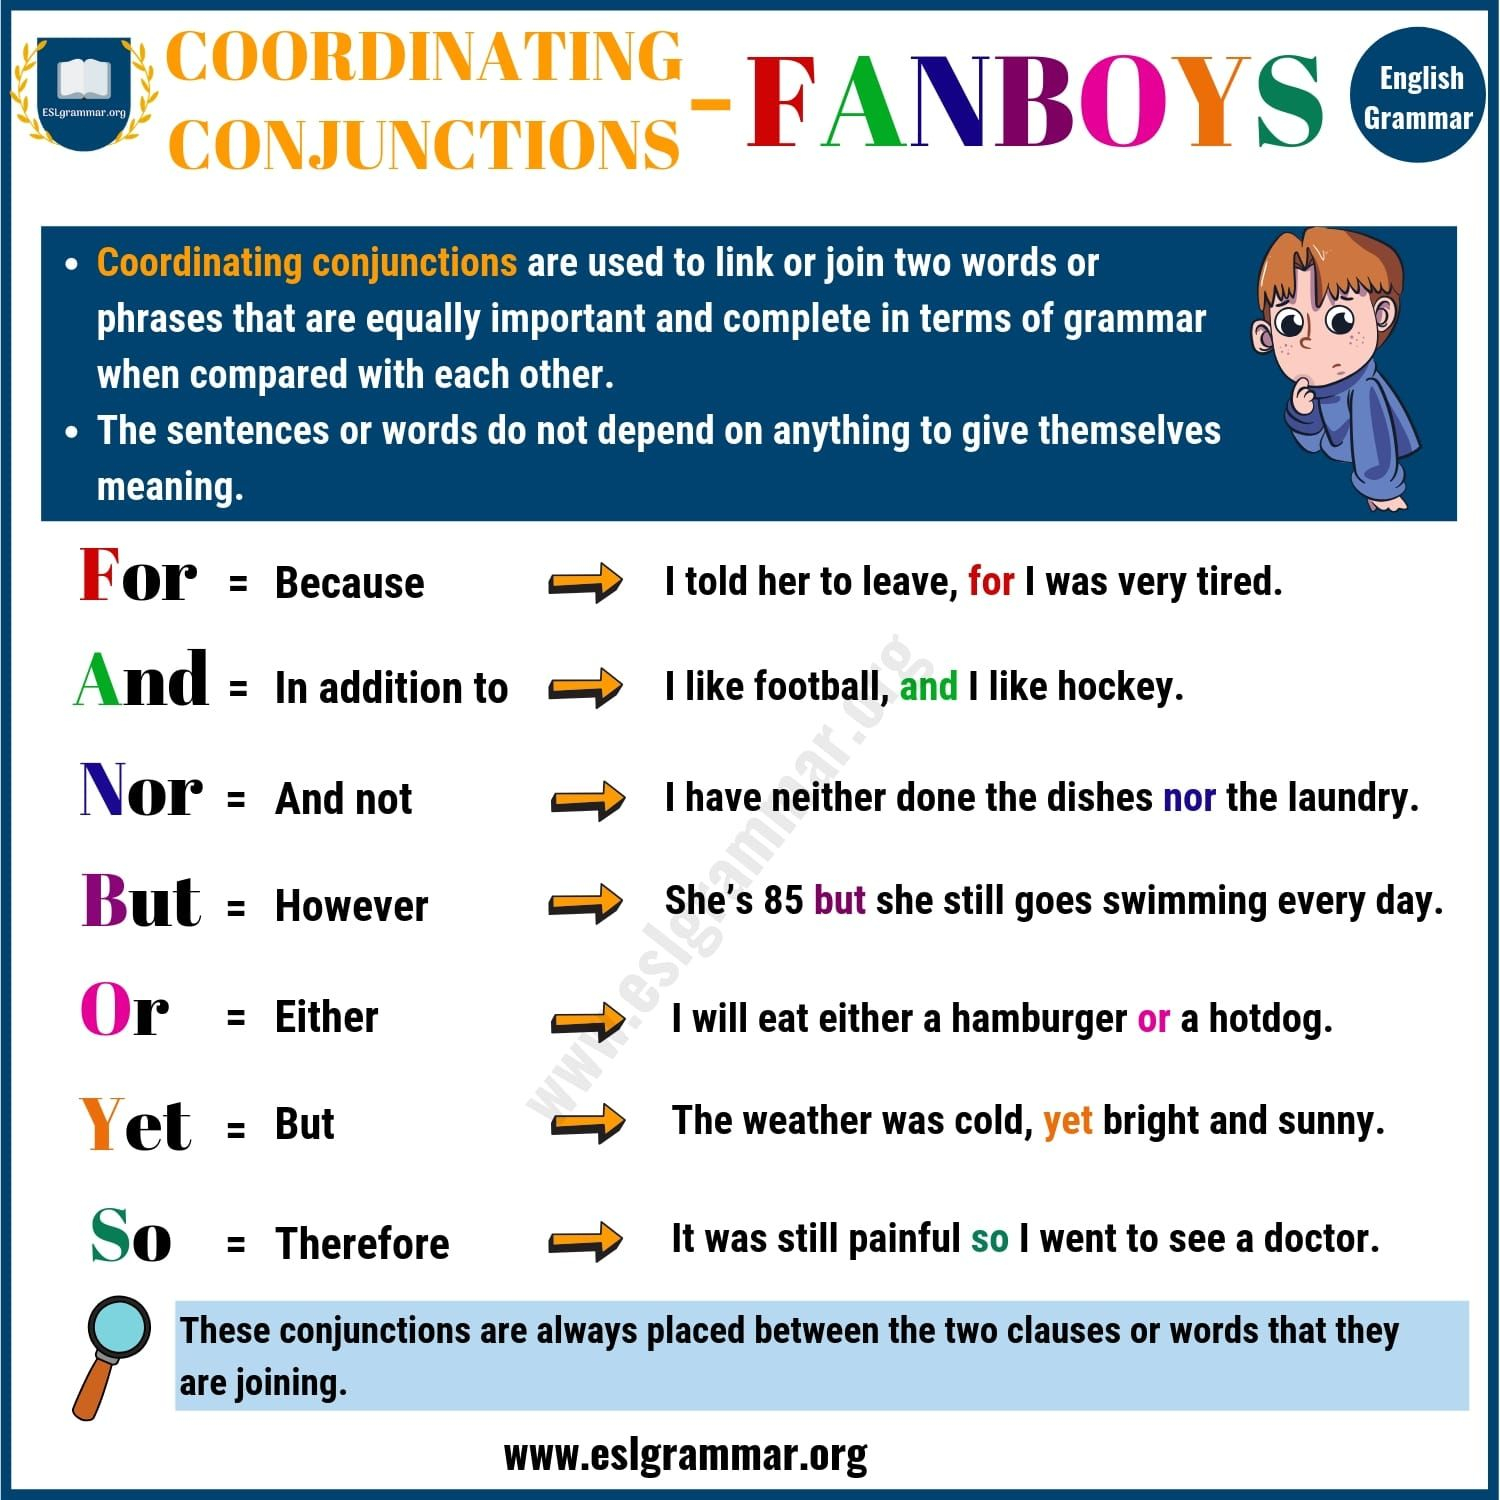 Fanboys Conjunction Practice